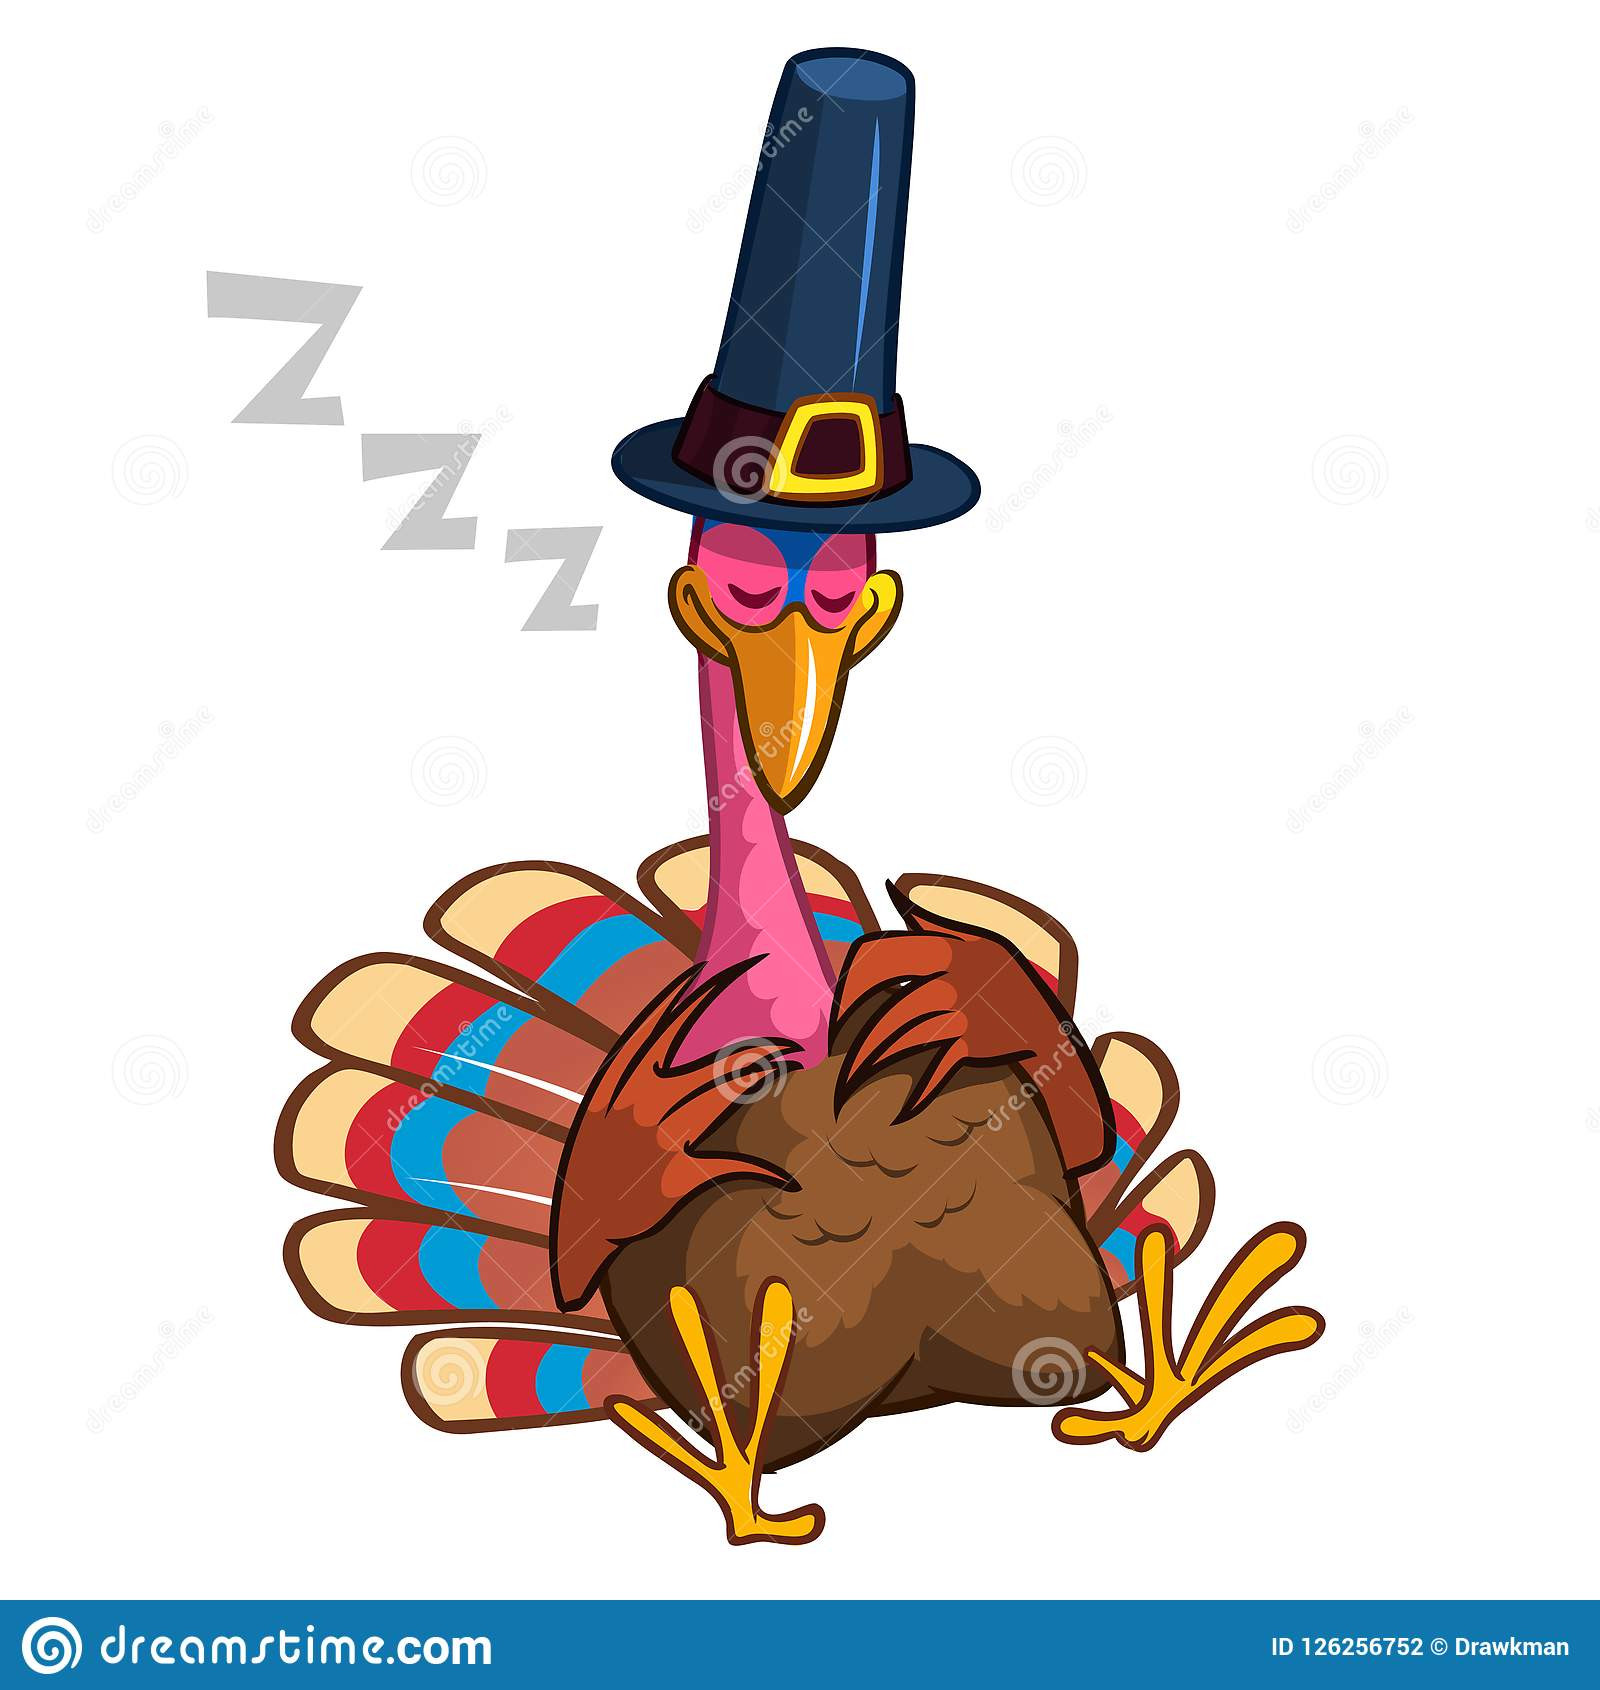 Turkey Thanksgiving Cartoon
 Thanksgiving Cartoon Turkey Character Sleeping Isolated